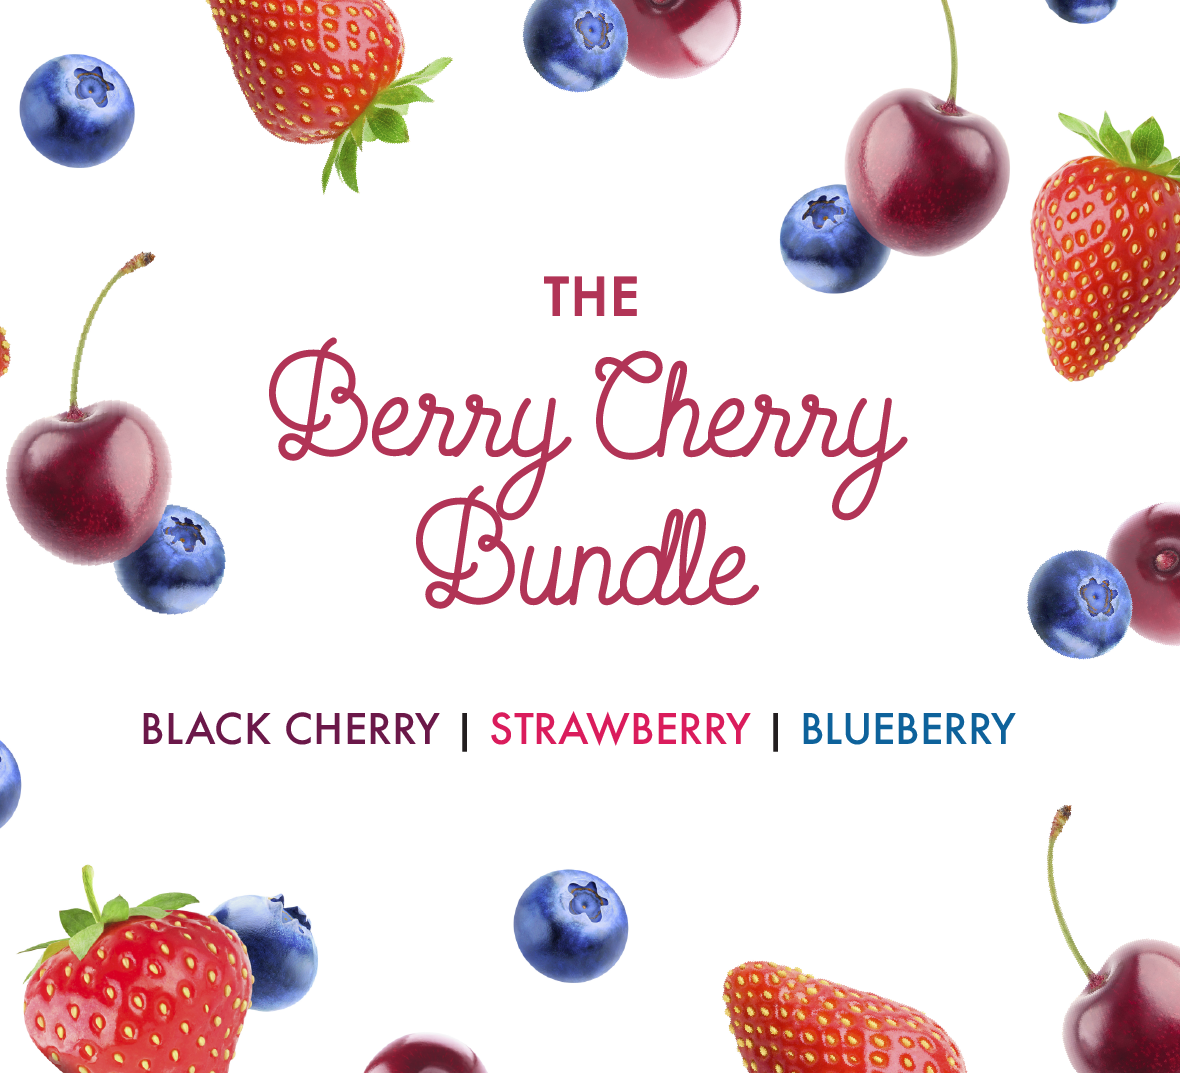 The Berry Cherry Bundle